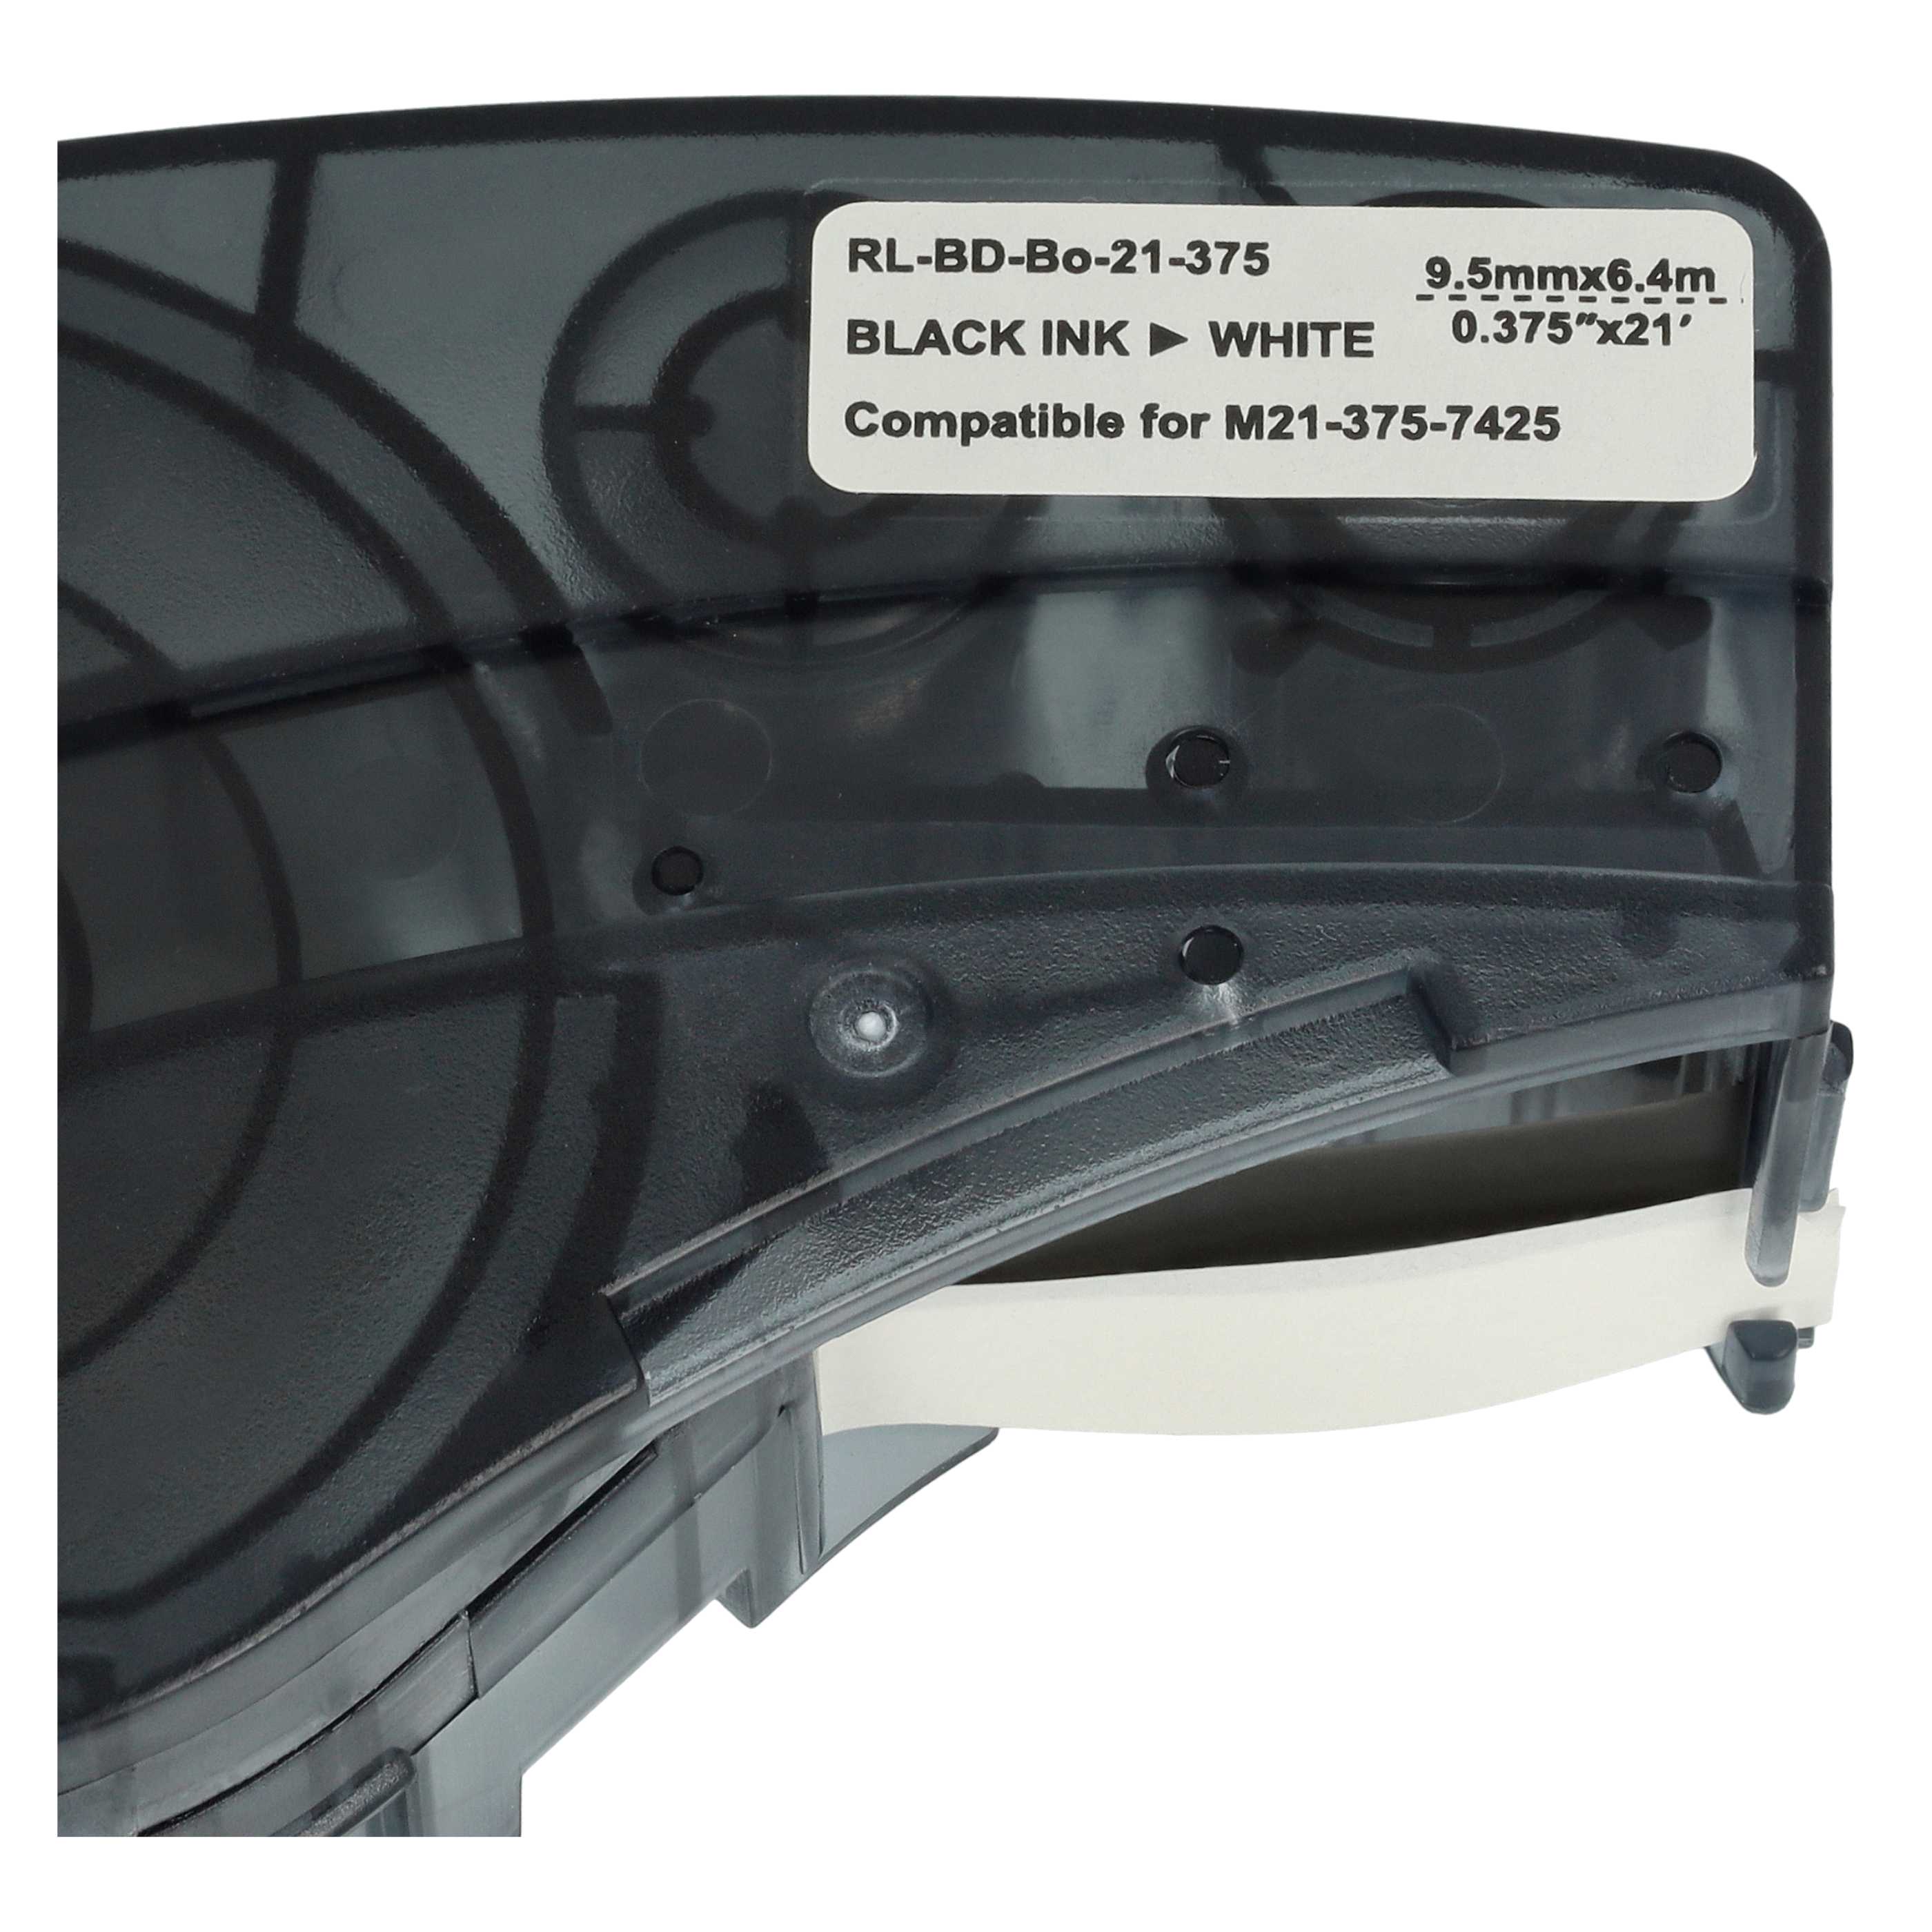 5x Casete cinta escritura reemplaza Brady M21-375-7425 Negro su Blanco